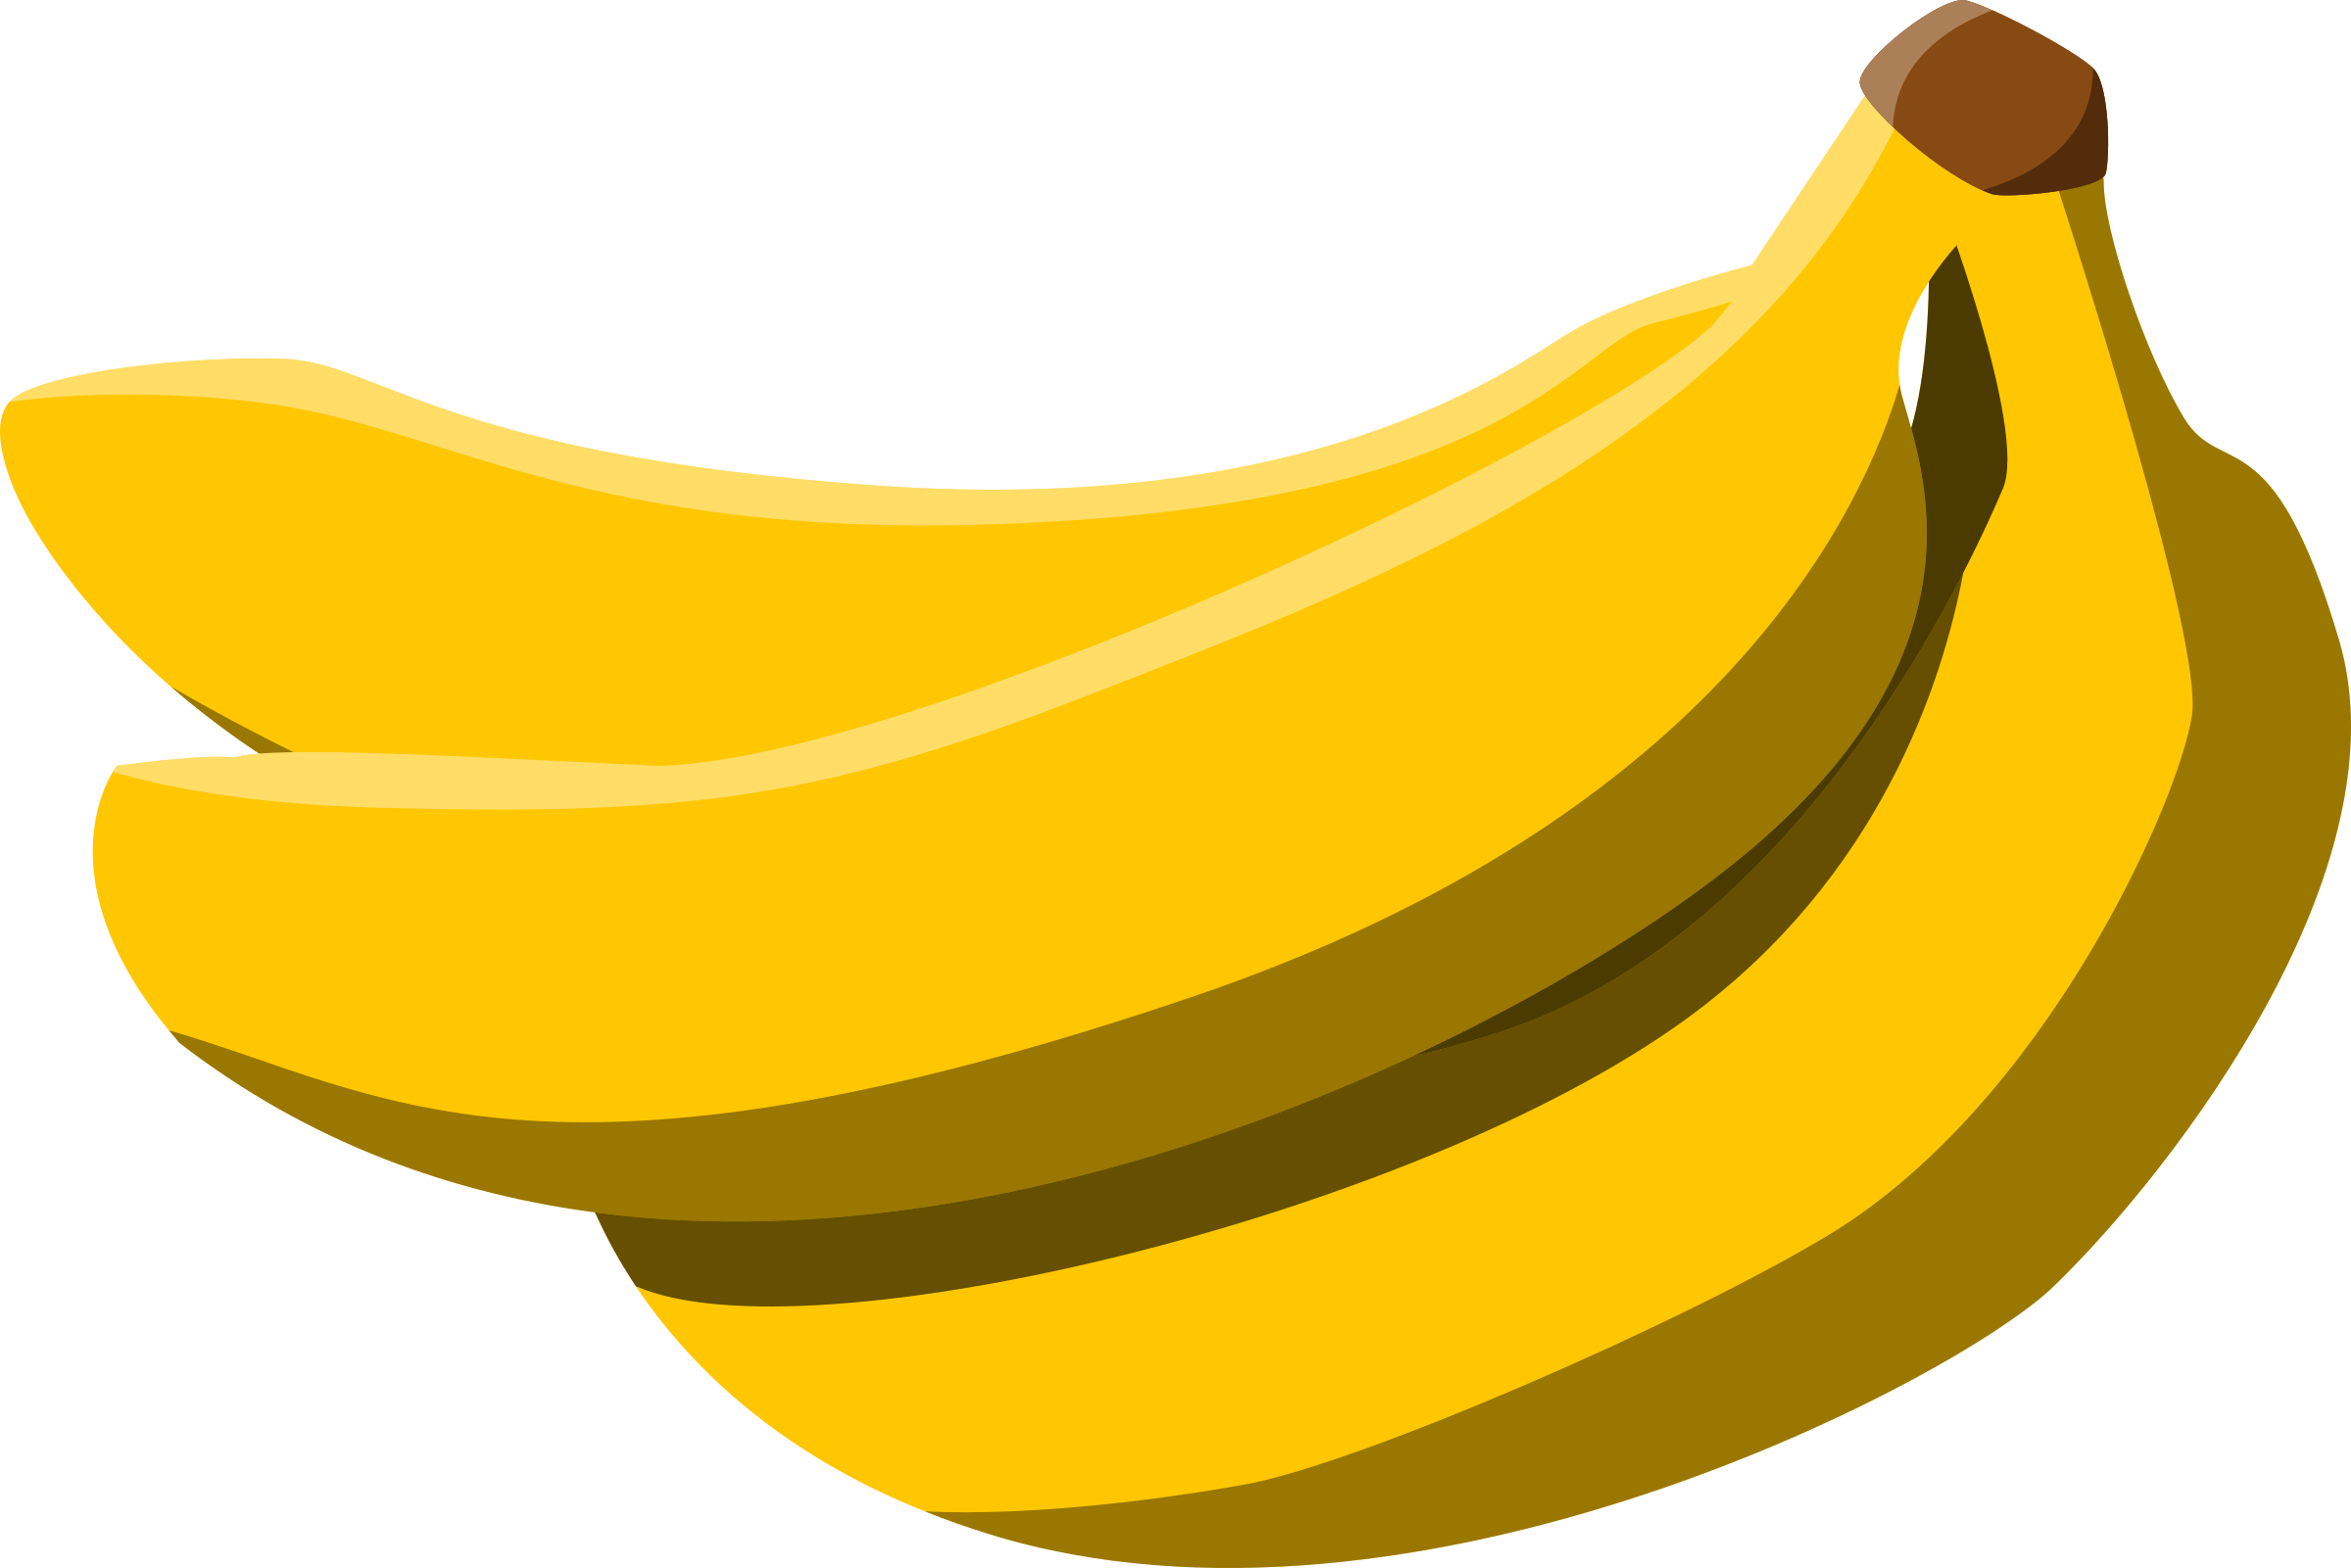 Banana reference